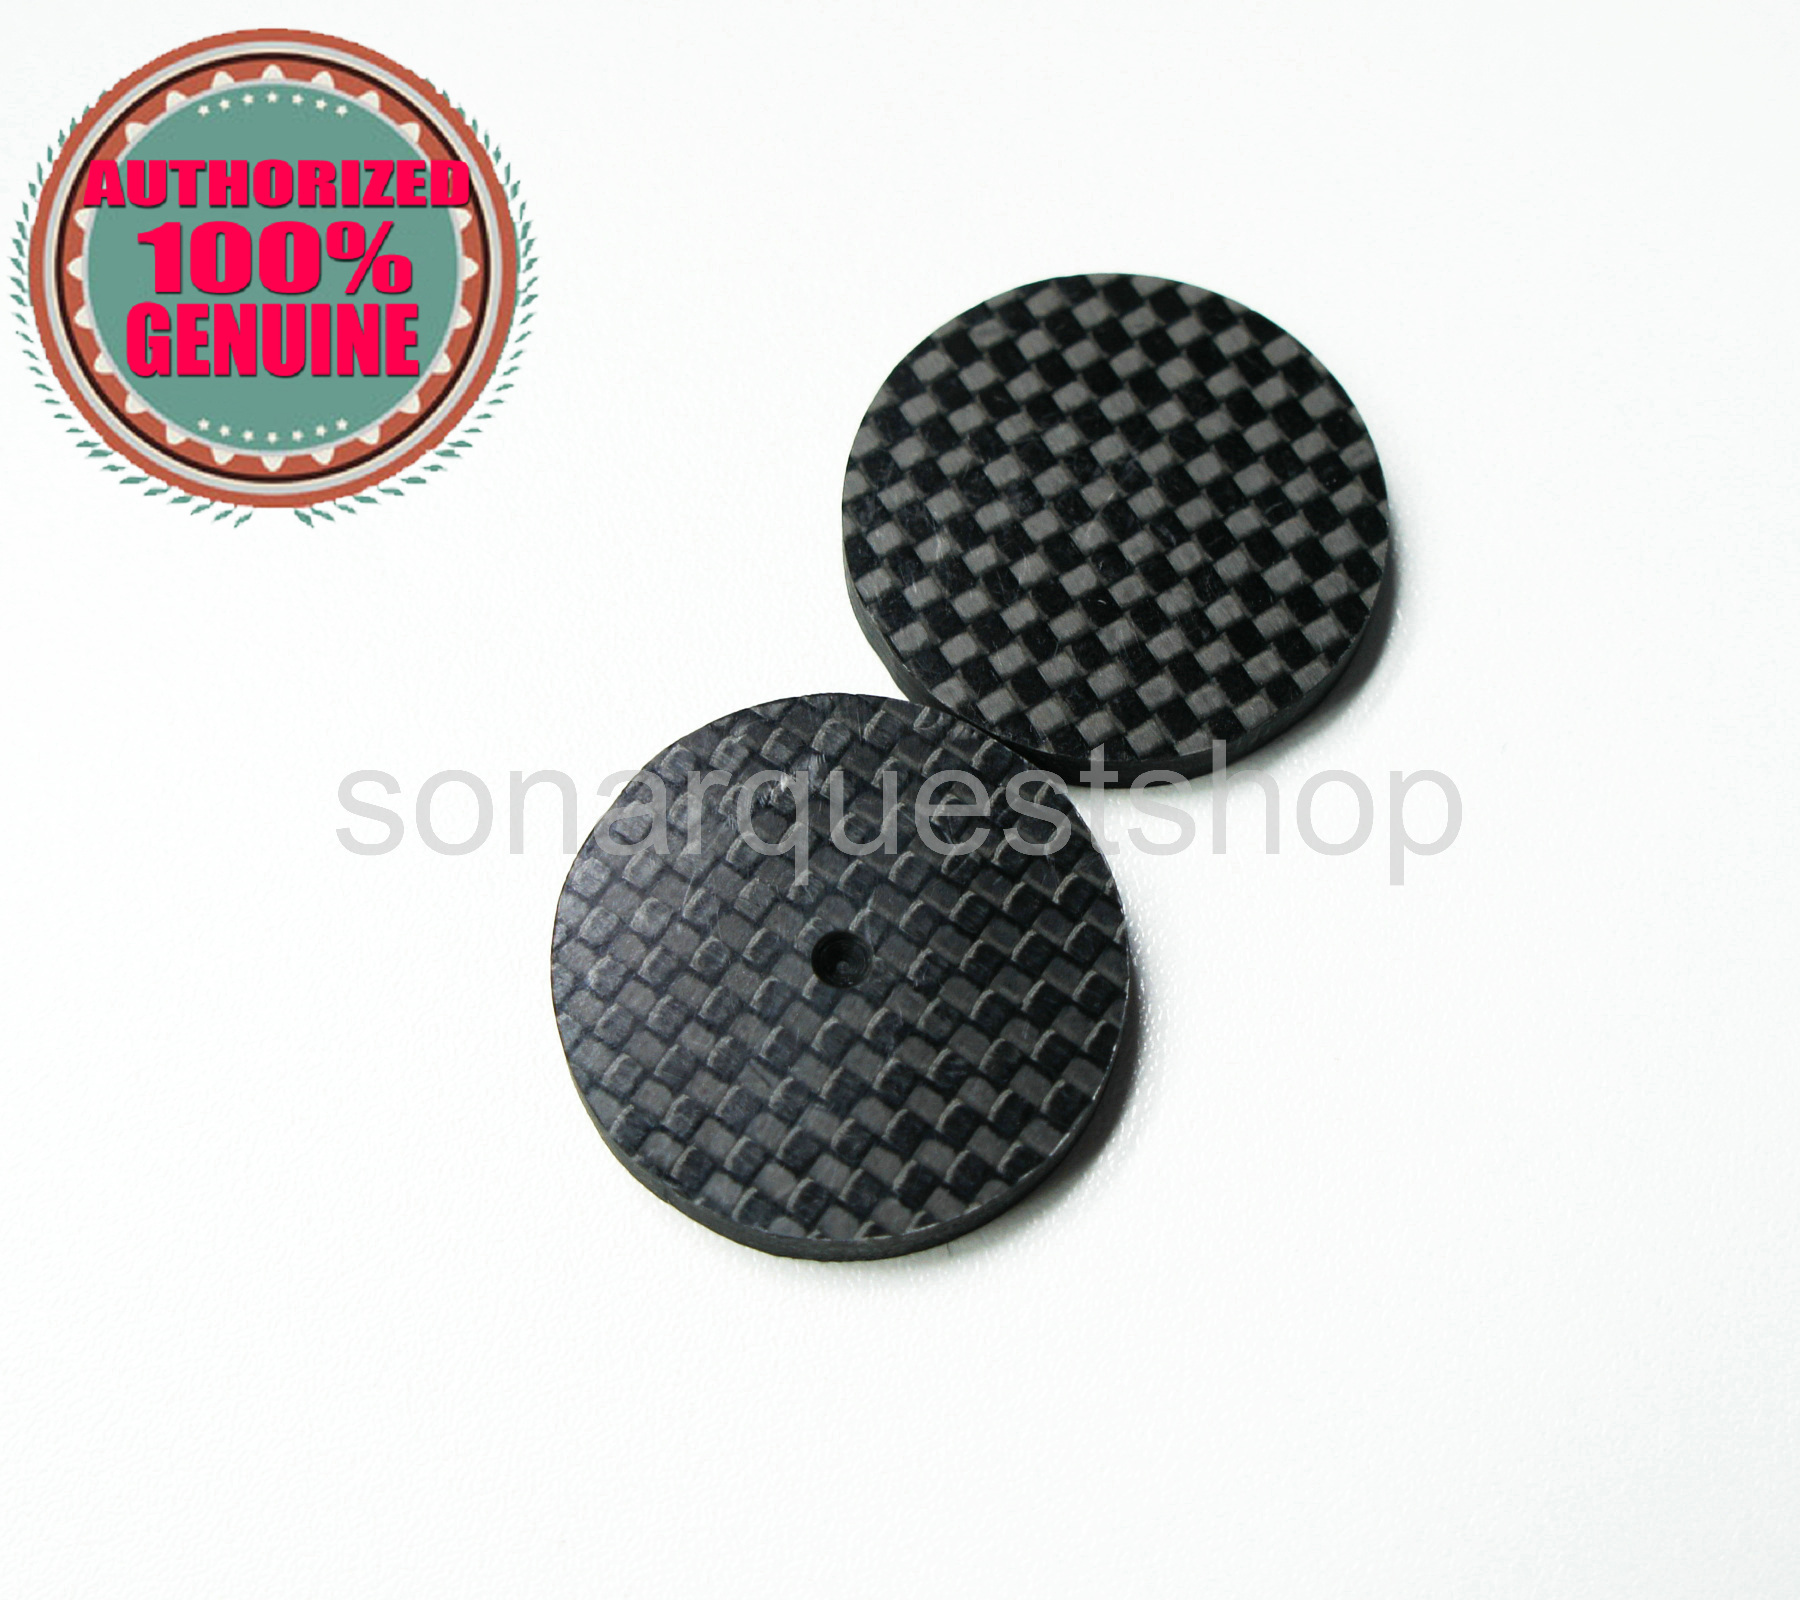 SONARQUEST Base Feet 4 Pcs 25mm Carbon Fiber Speaker Spike Cone Pad Isolation